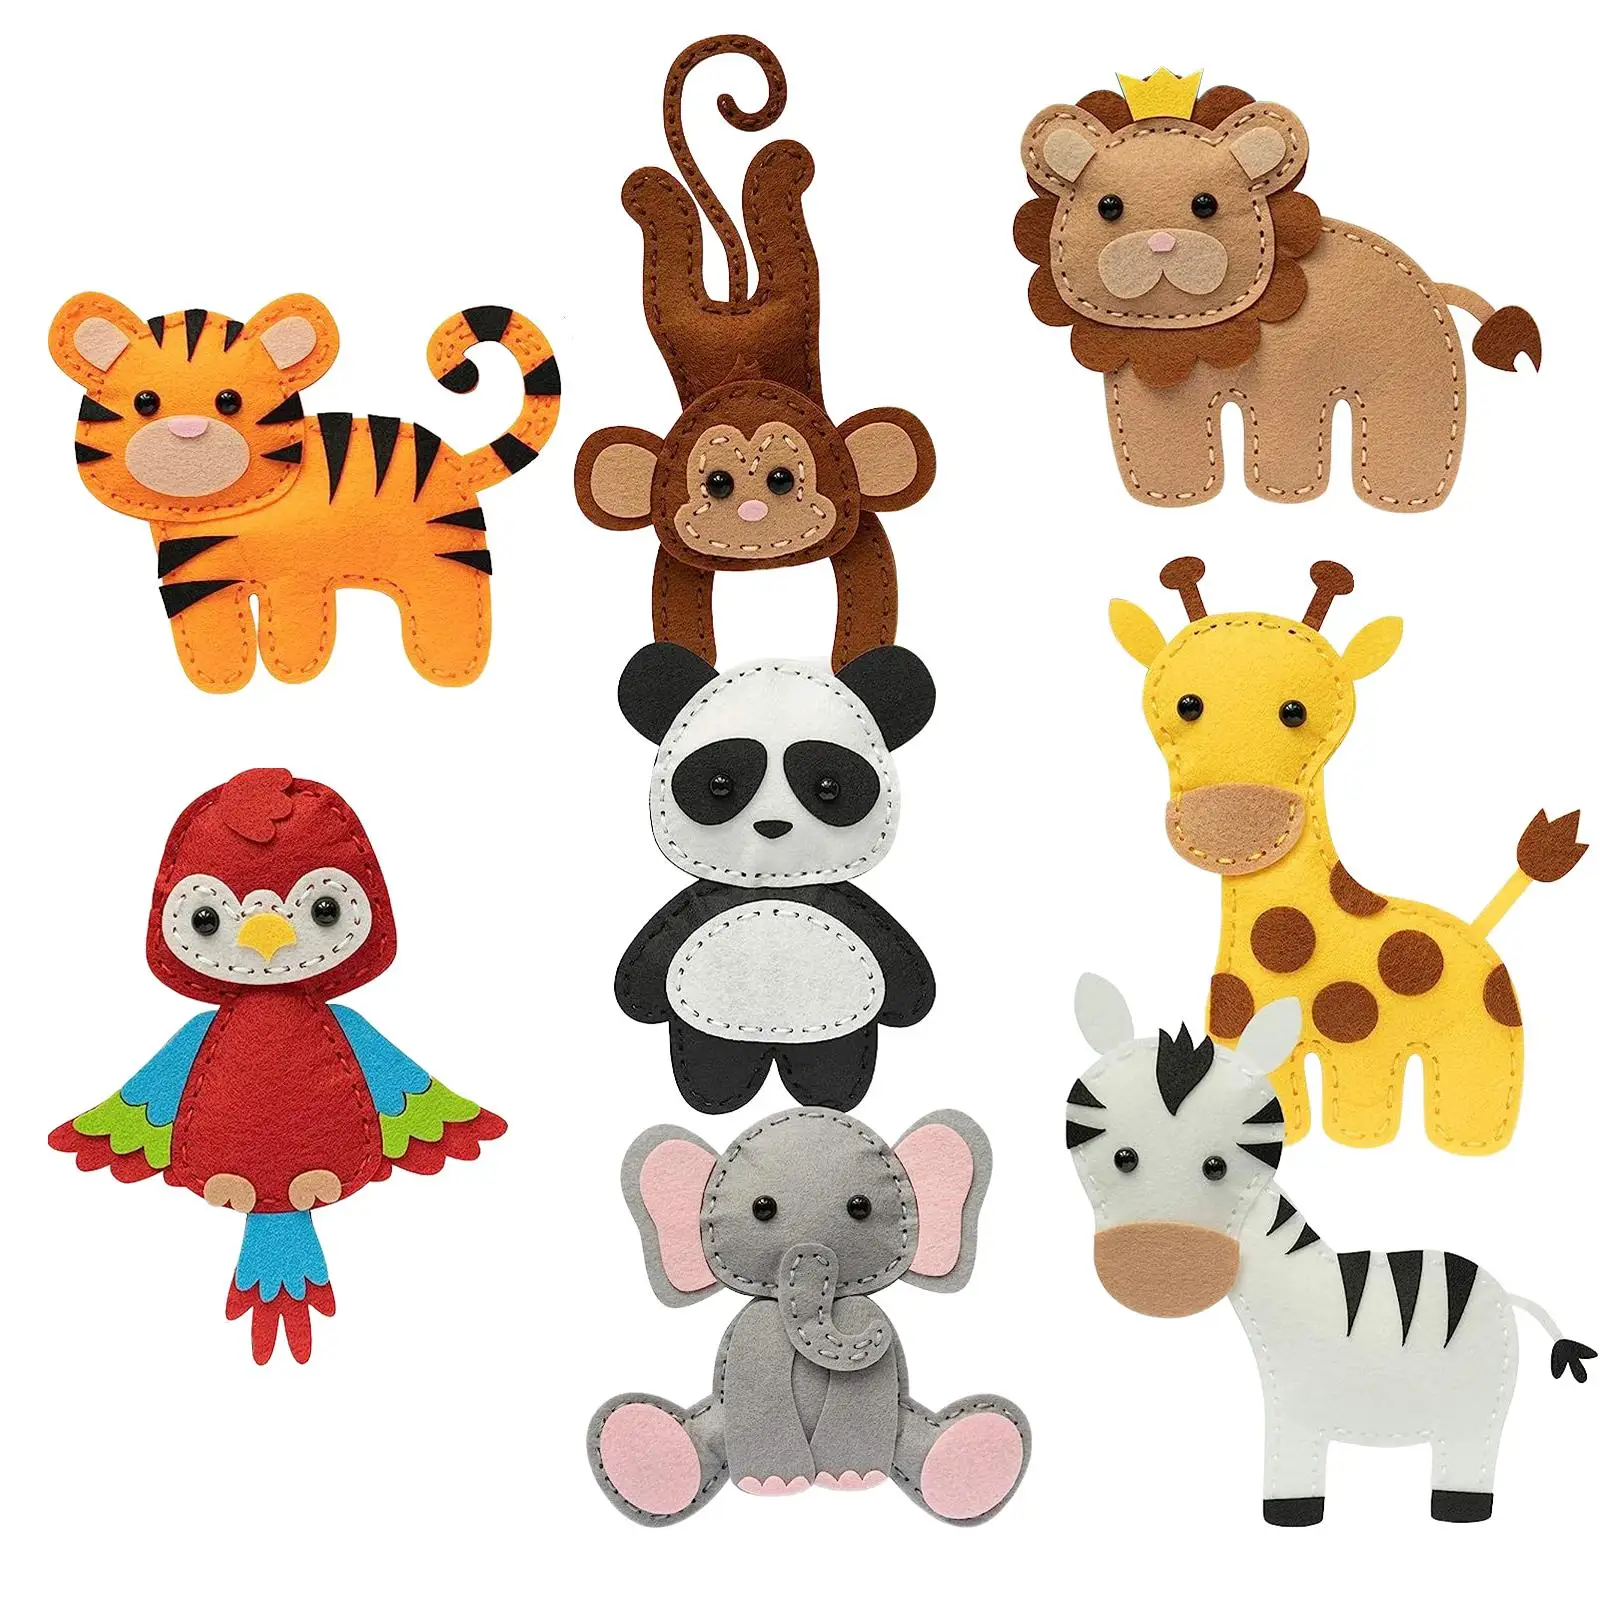 Zoo Felt Animal Animals Craft Art Craft Kits for Beginners DIY Crafting and Sewing Set for Beginner Children Girls Boys Teens